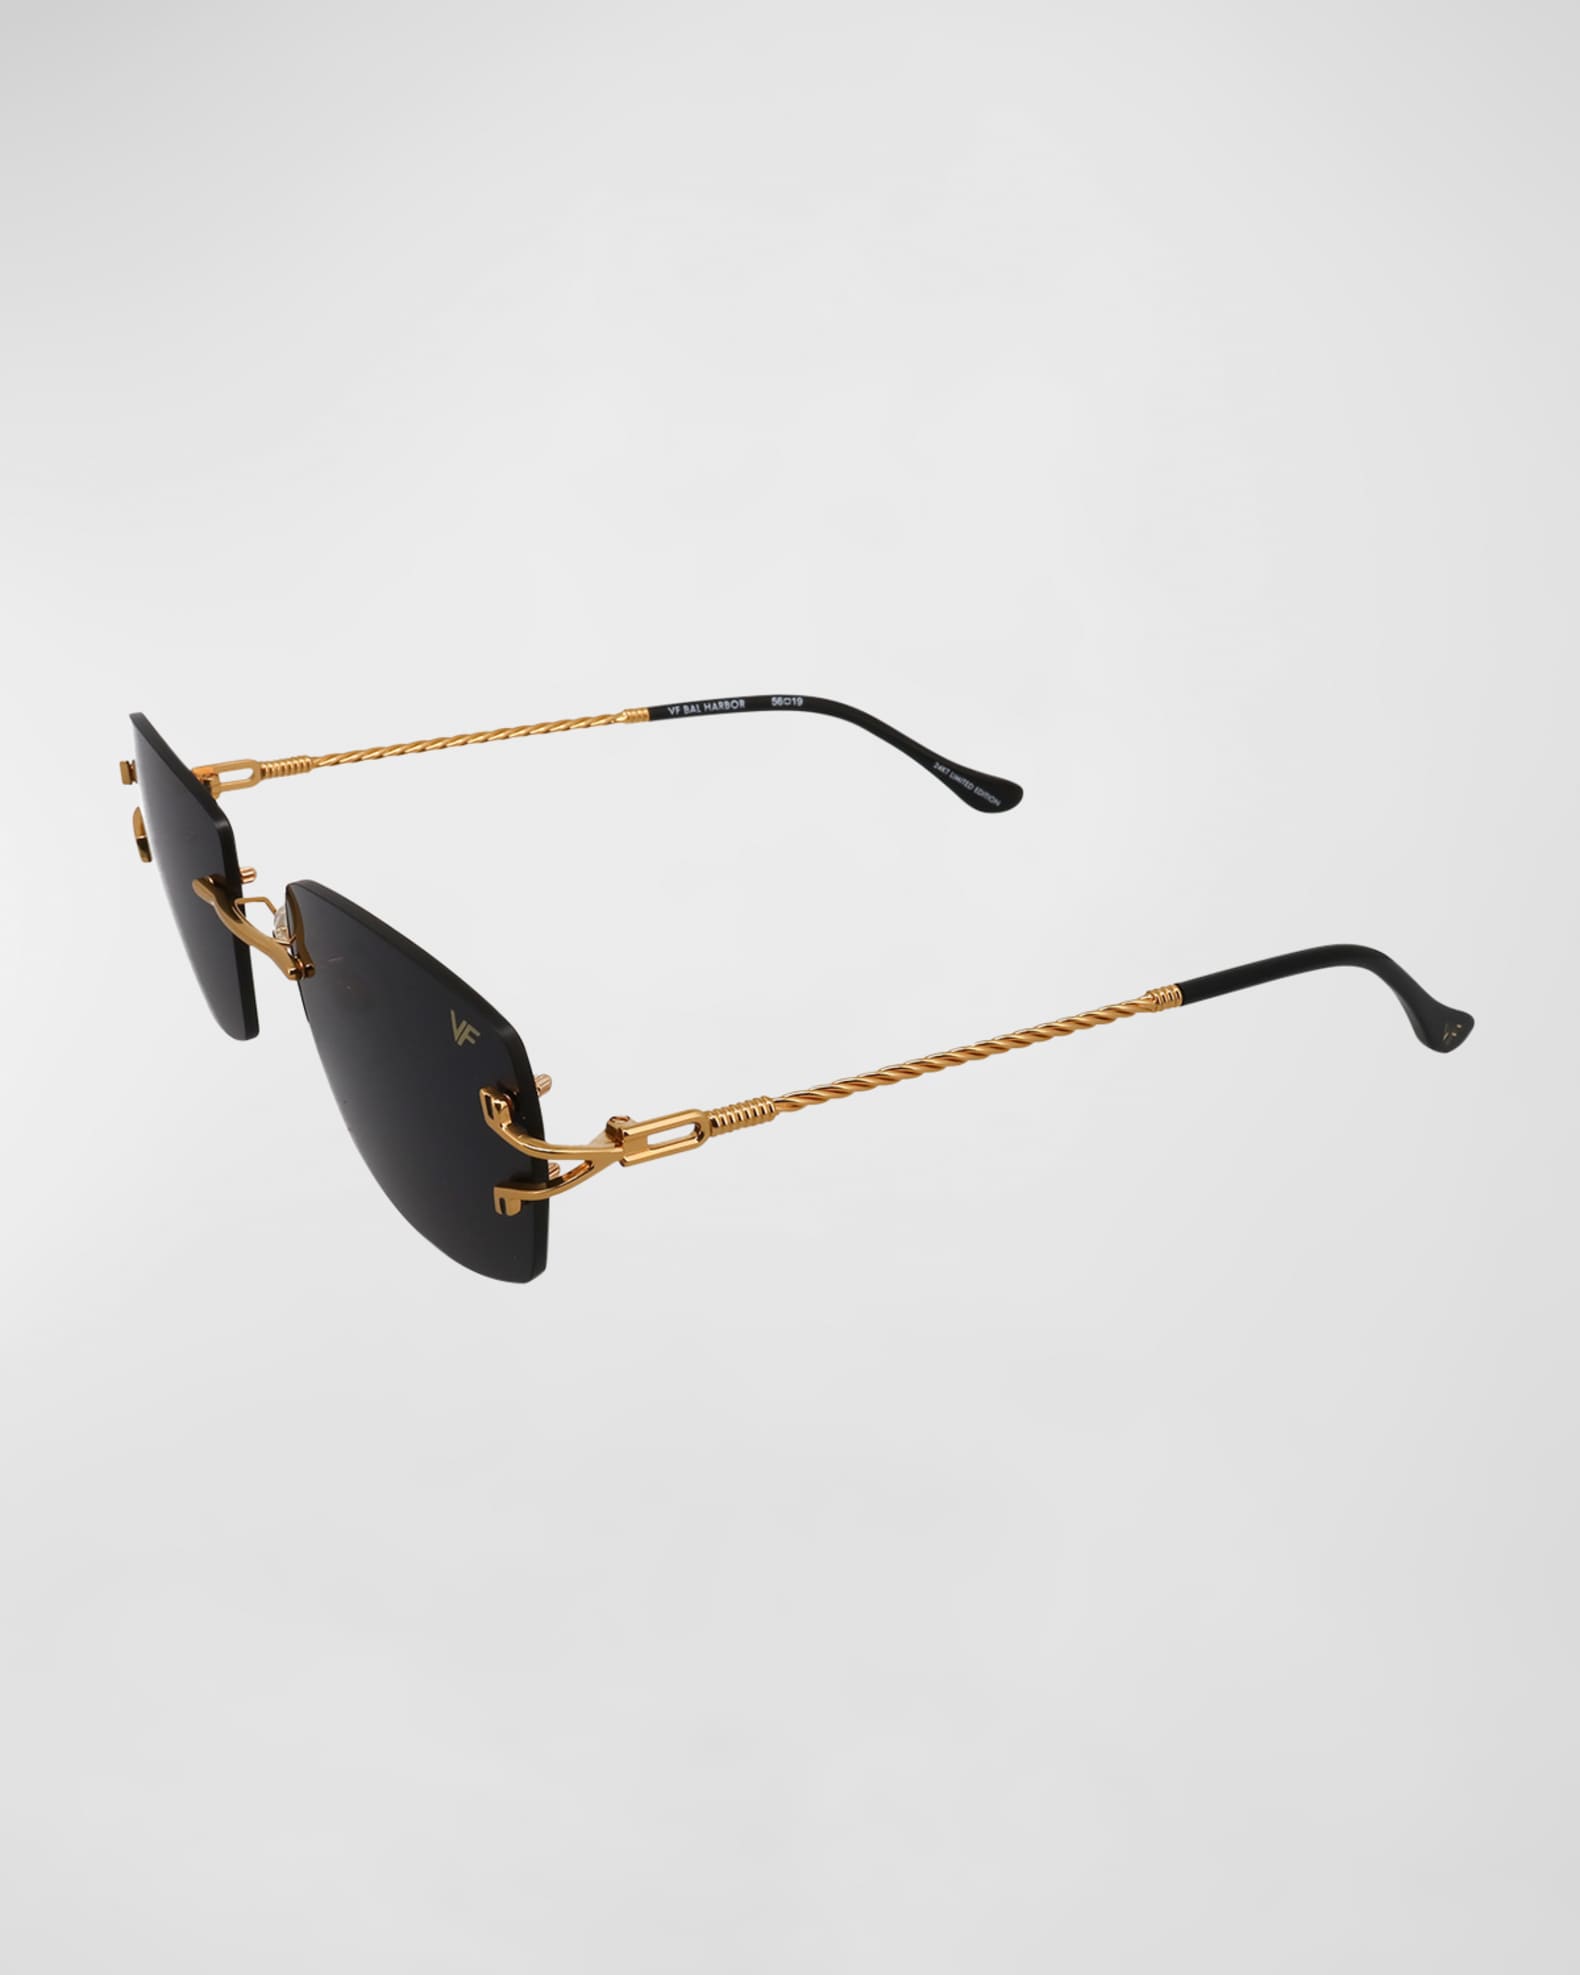 Vintage Frames Company Men's VF Bal Harbour Rectangle Rimless Sunglasses, Black, Men's, Sunglasses Square Sunglasses